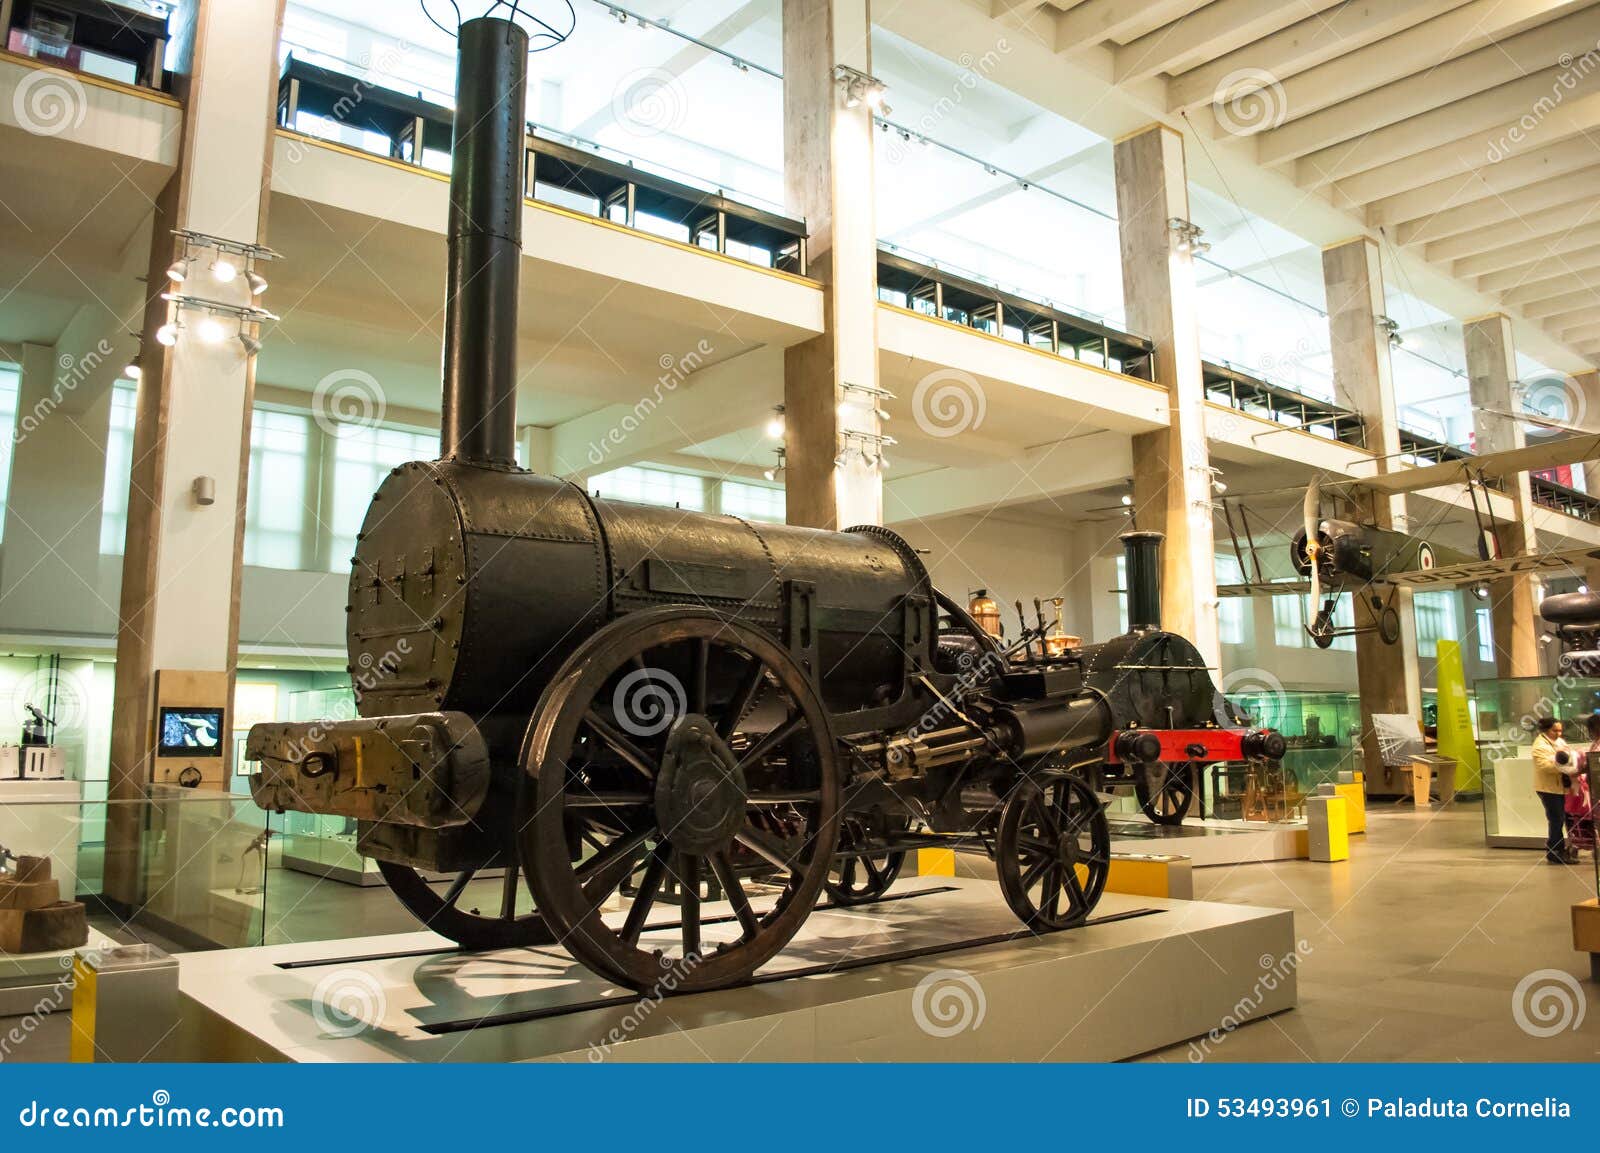 Steam museum in london фото 83